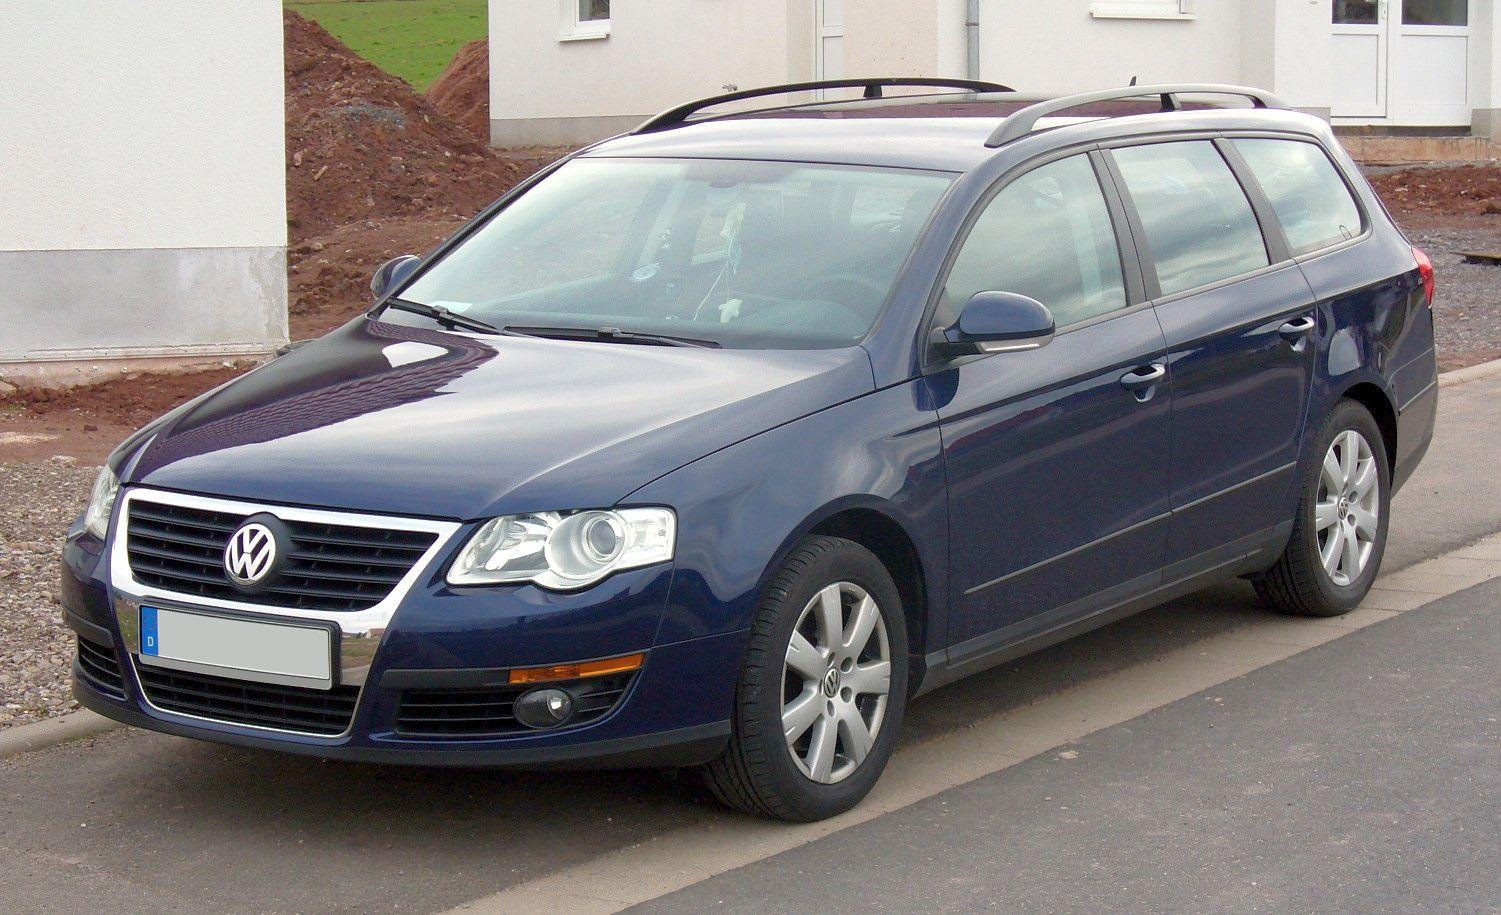 Фольксваген пассат б6 2. Фольксваген Пассат b6 универсал. Volkswagen Passat b6 variant. Volkswagen Passat variant (b6) 2008. Фольксваген ПСАДА б6 универсал.